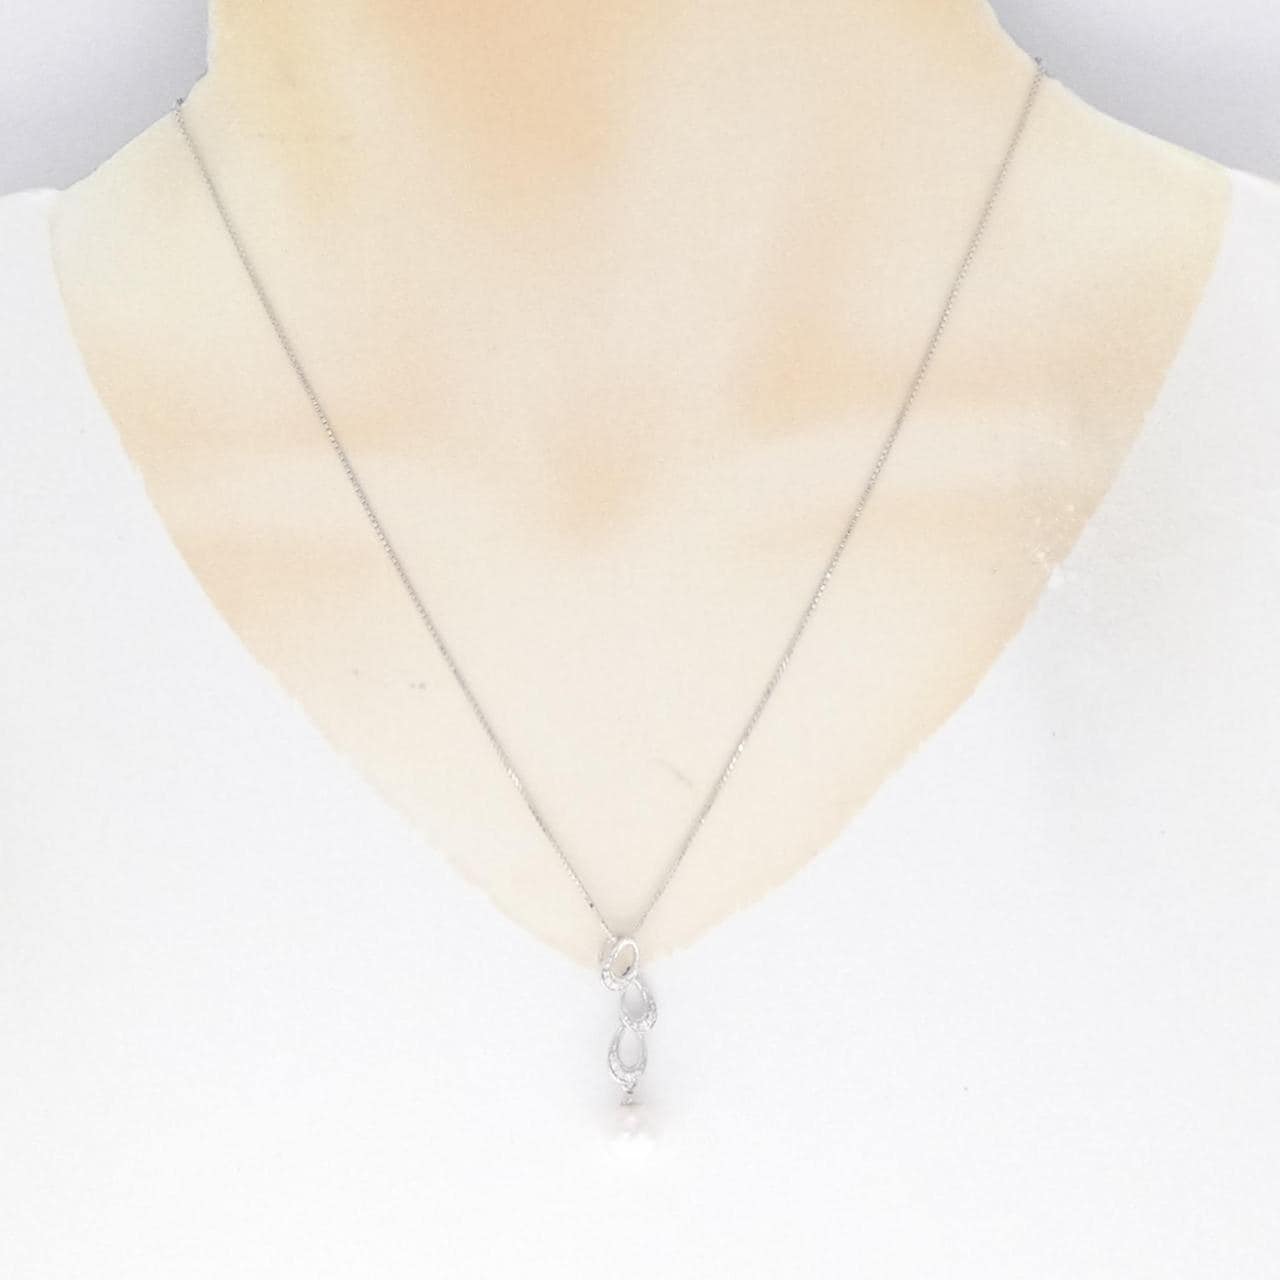 K18WG Akoya pearl necklace 8.2mm